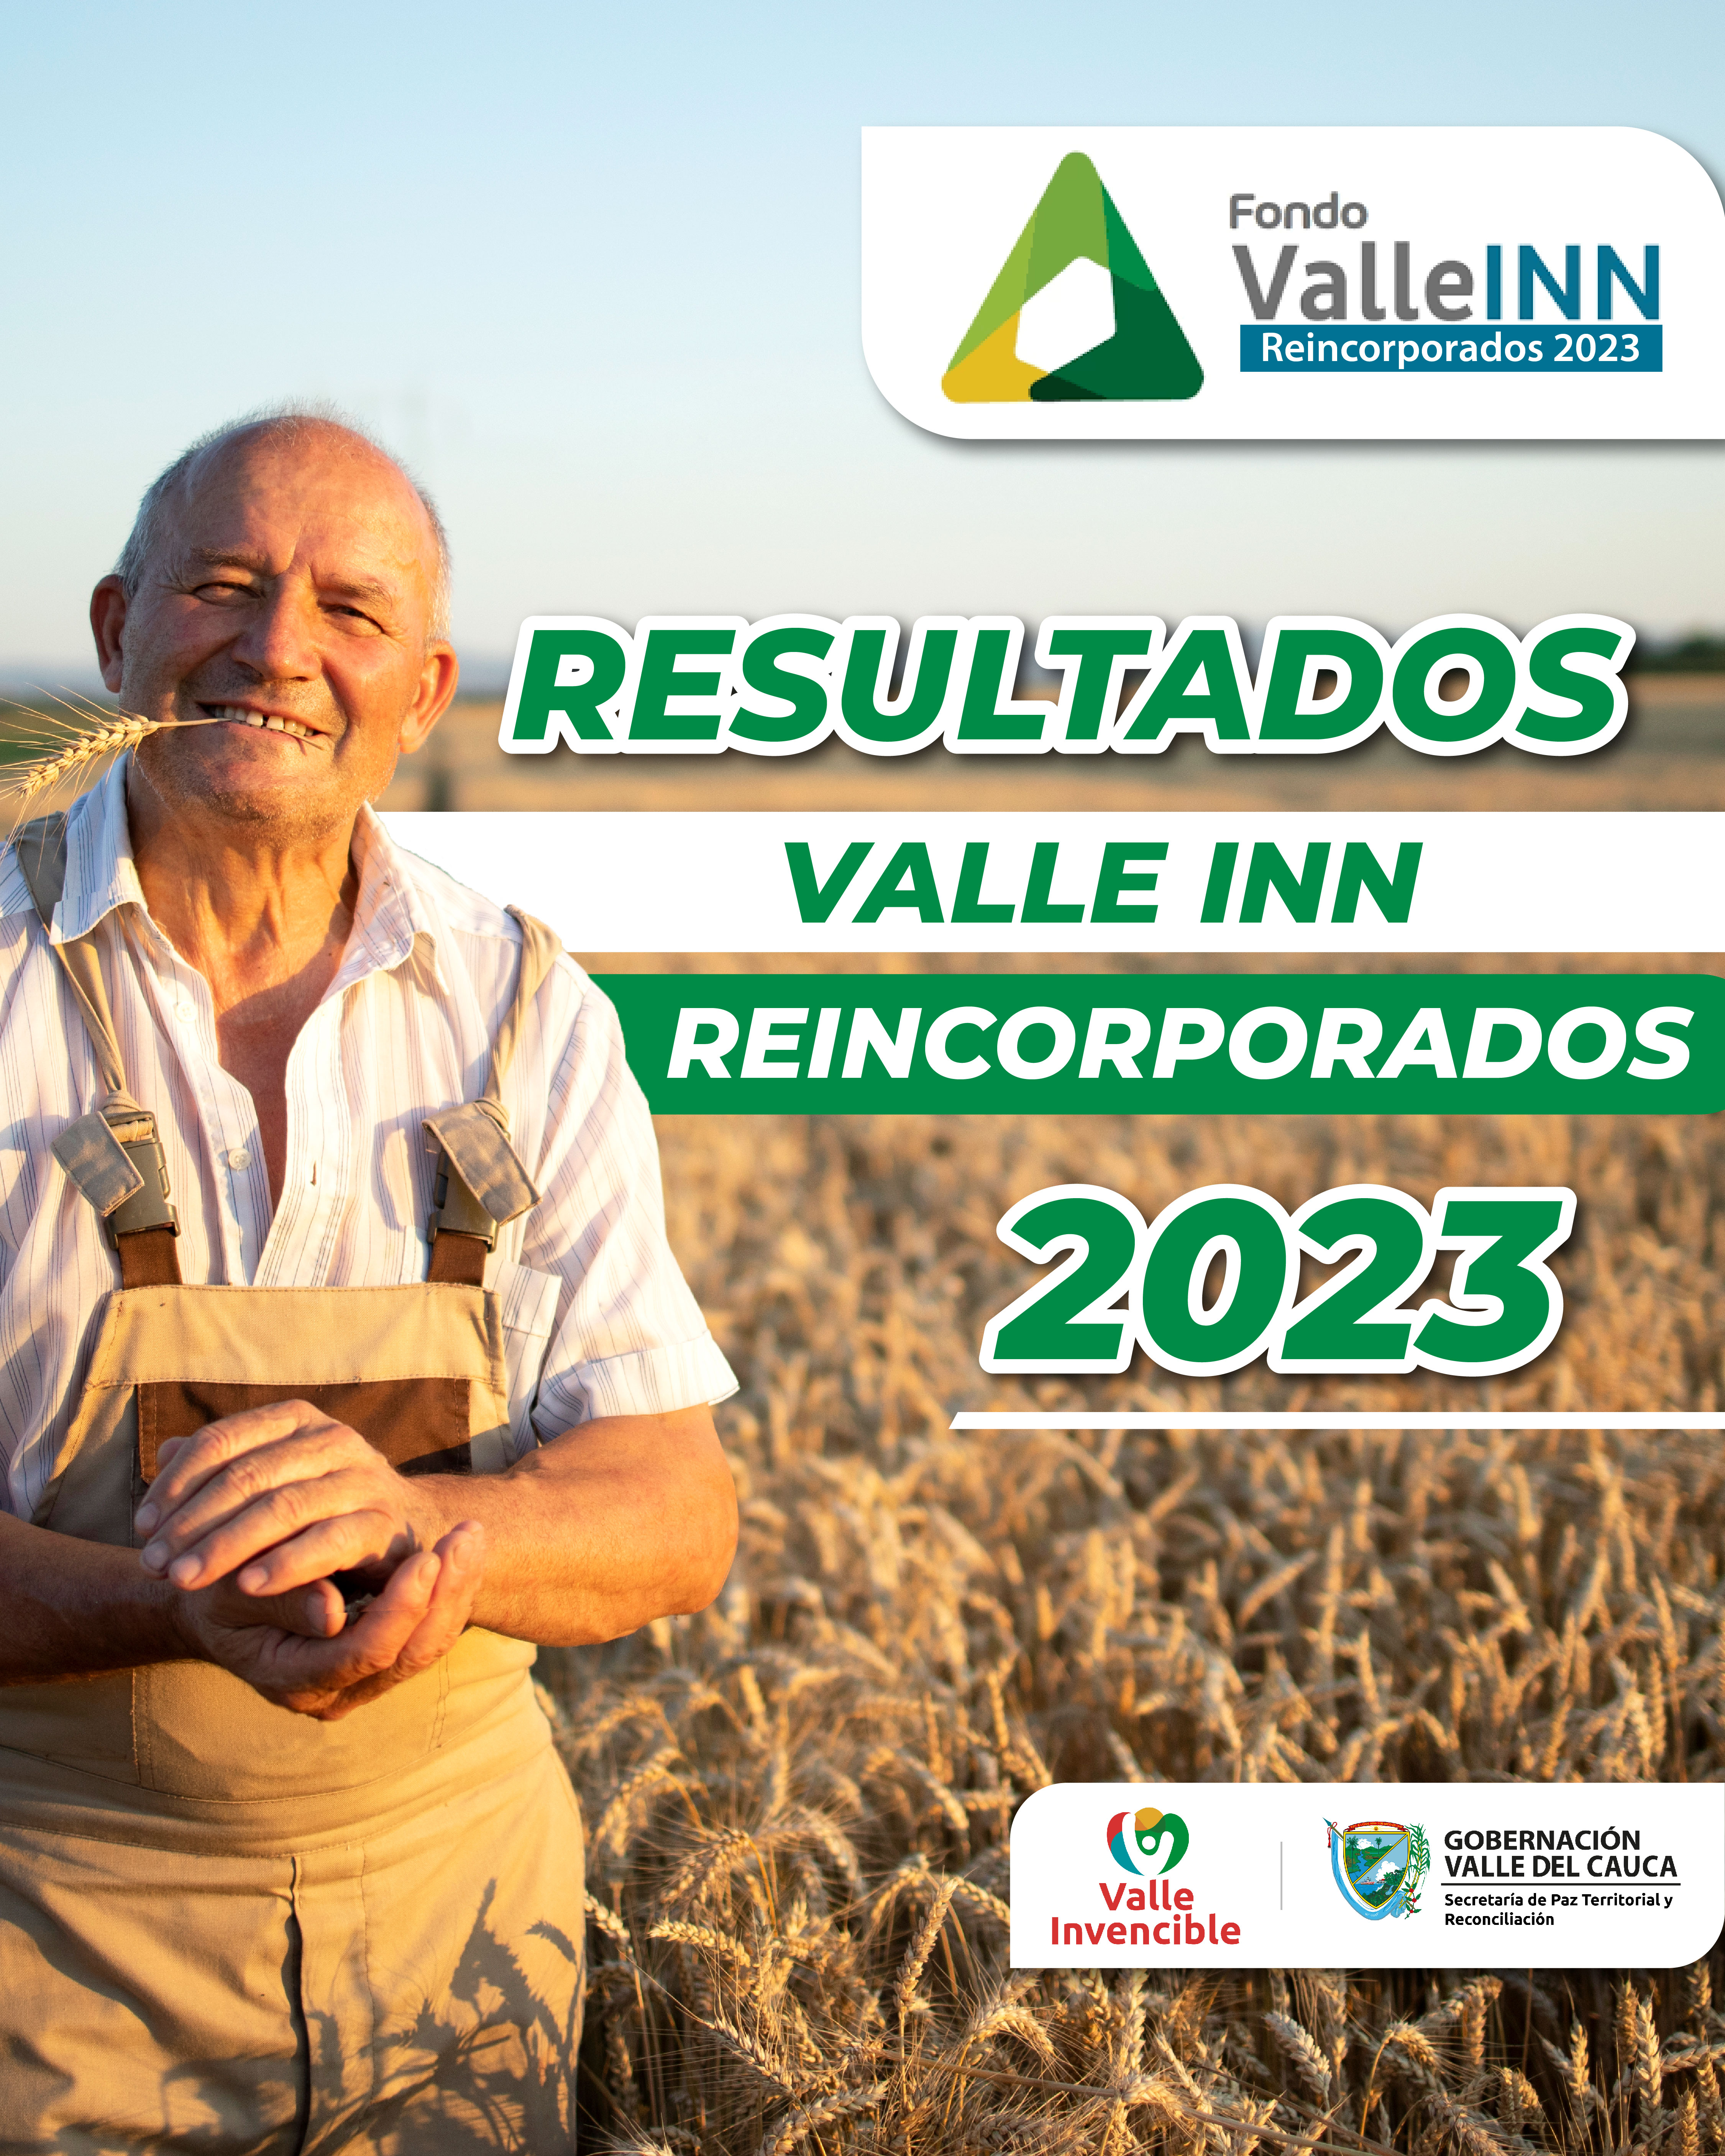 ValleINN Reincorporados 2023-01